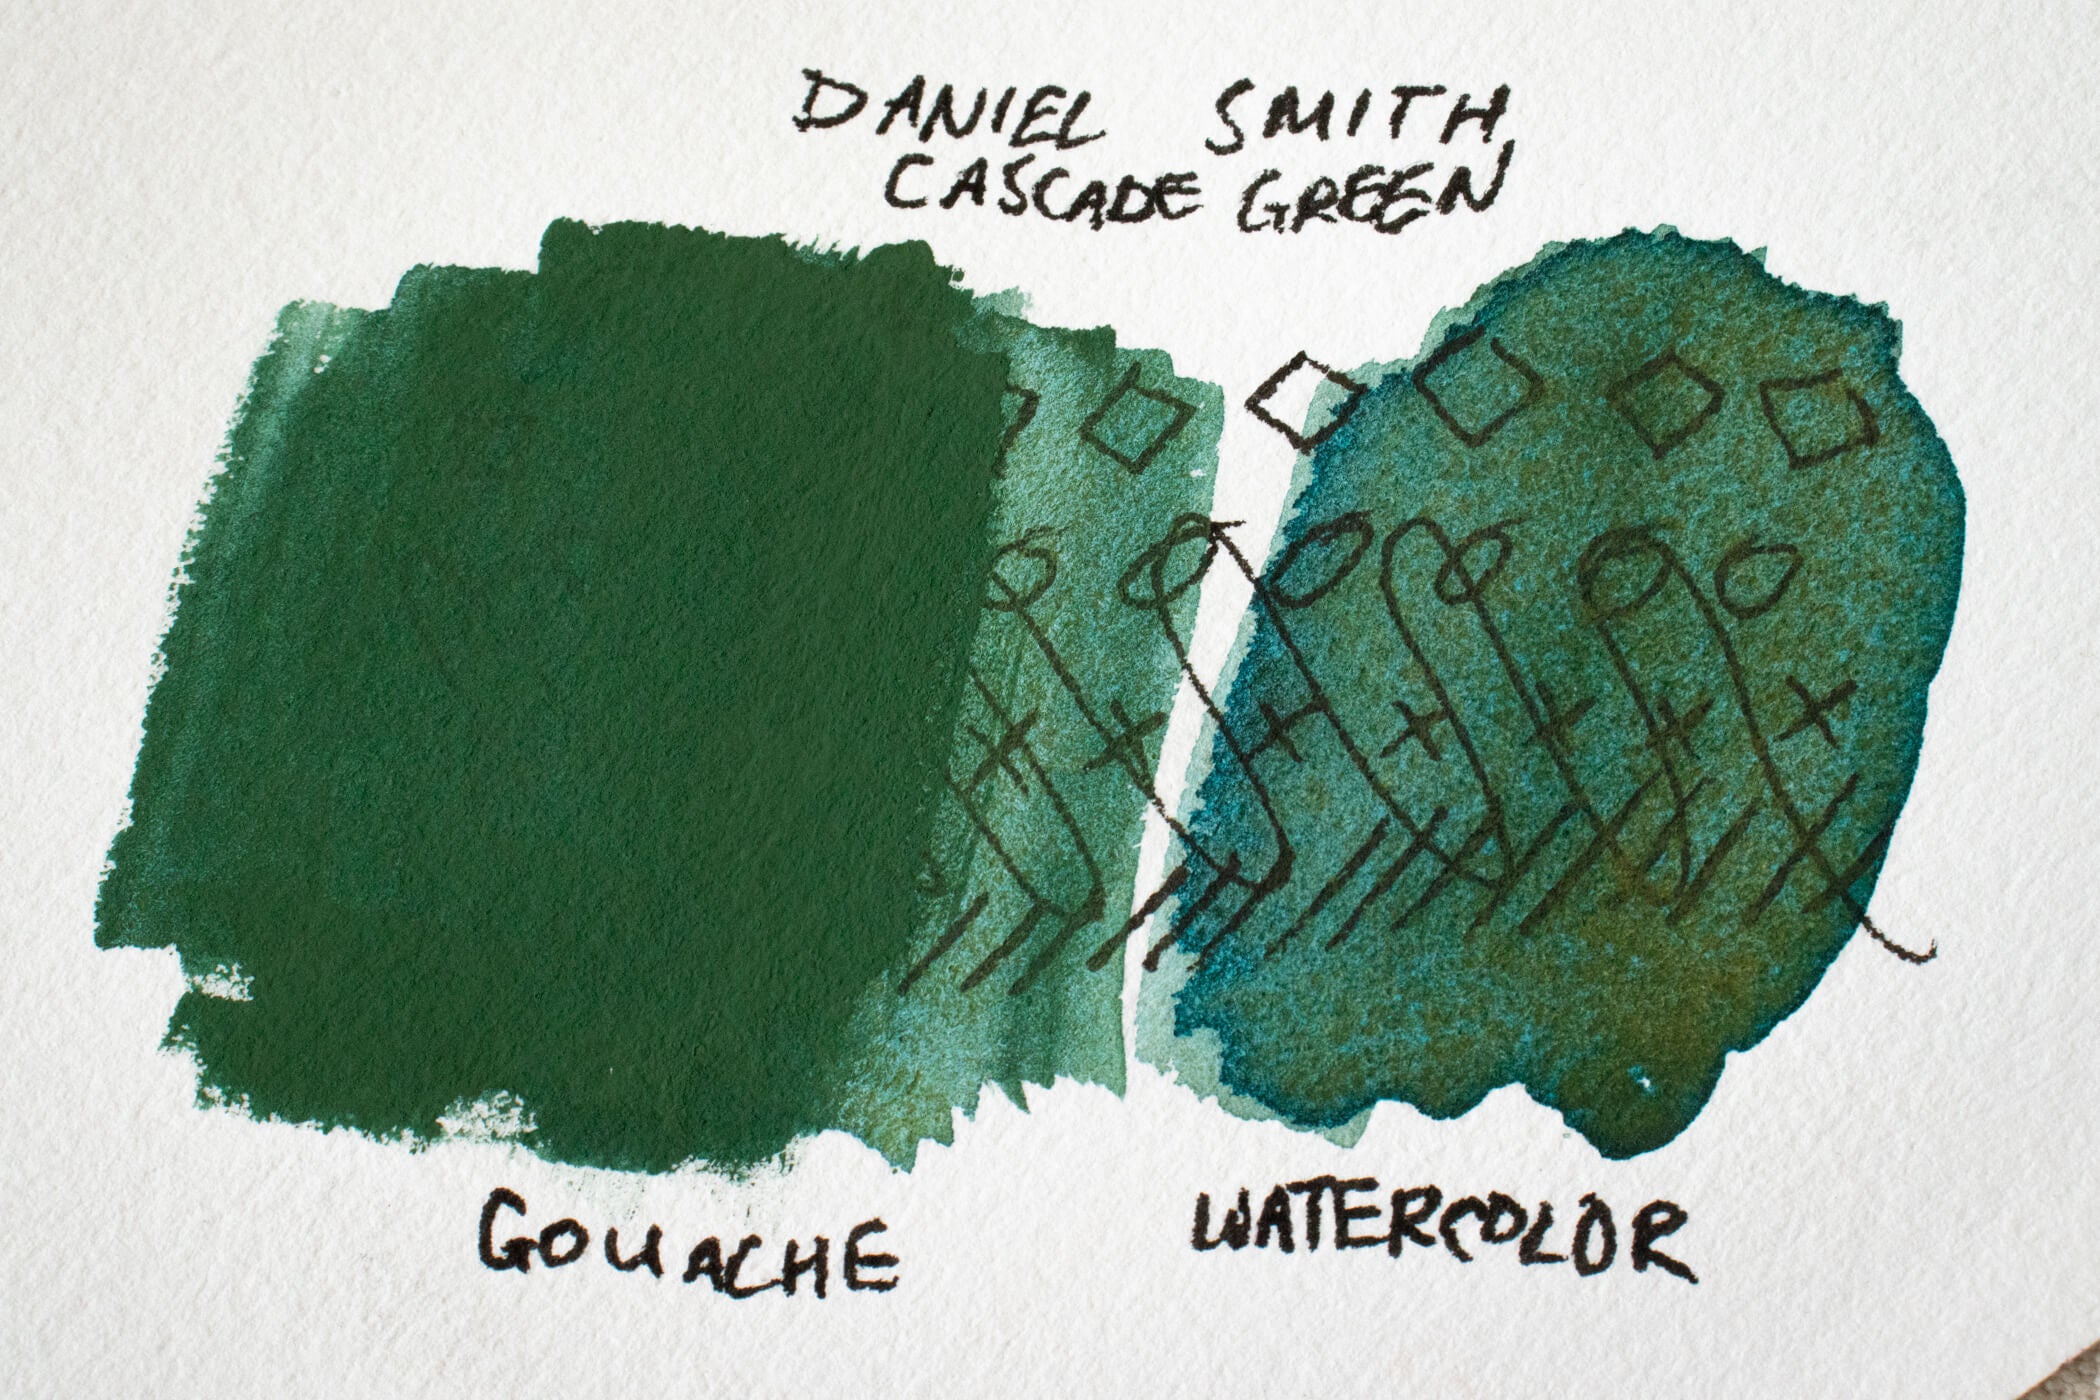 Titanium White GOUACHE - DANIEL SMITH Artists' Materials